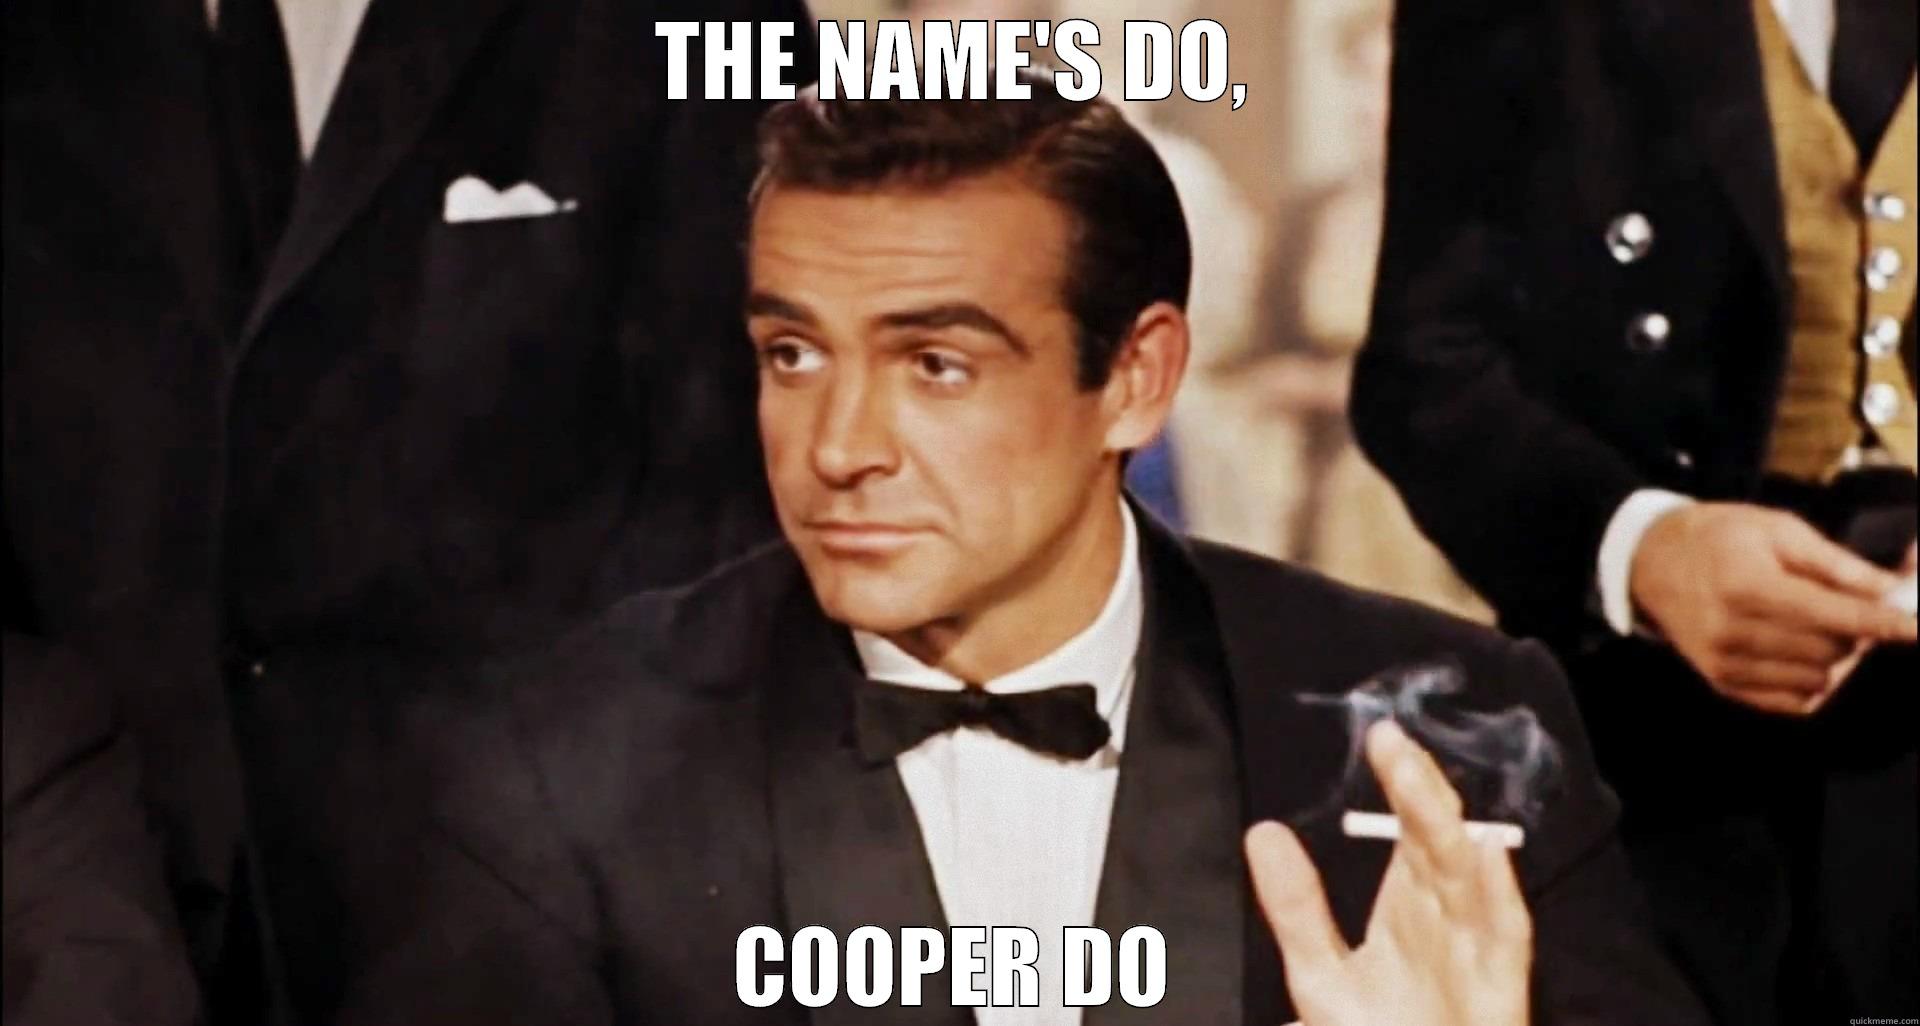 The Name's Bond - THE NAME'S DO, COOPER DO Misc